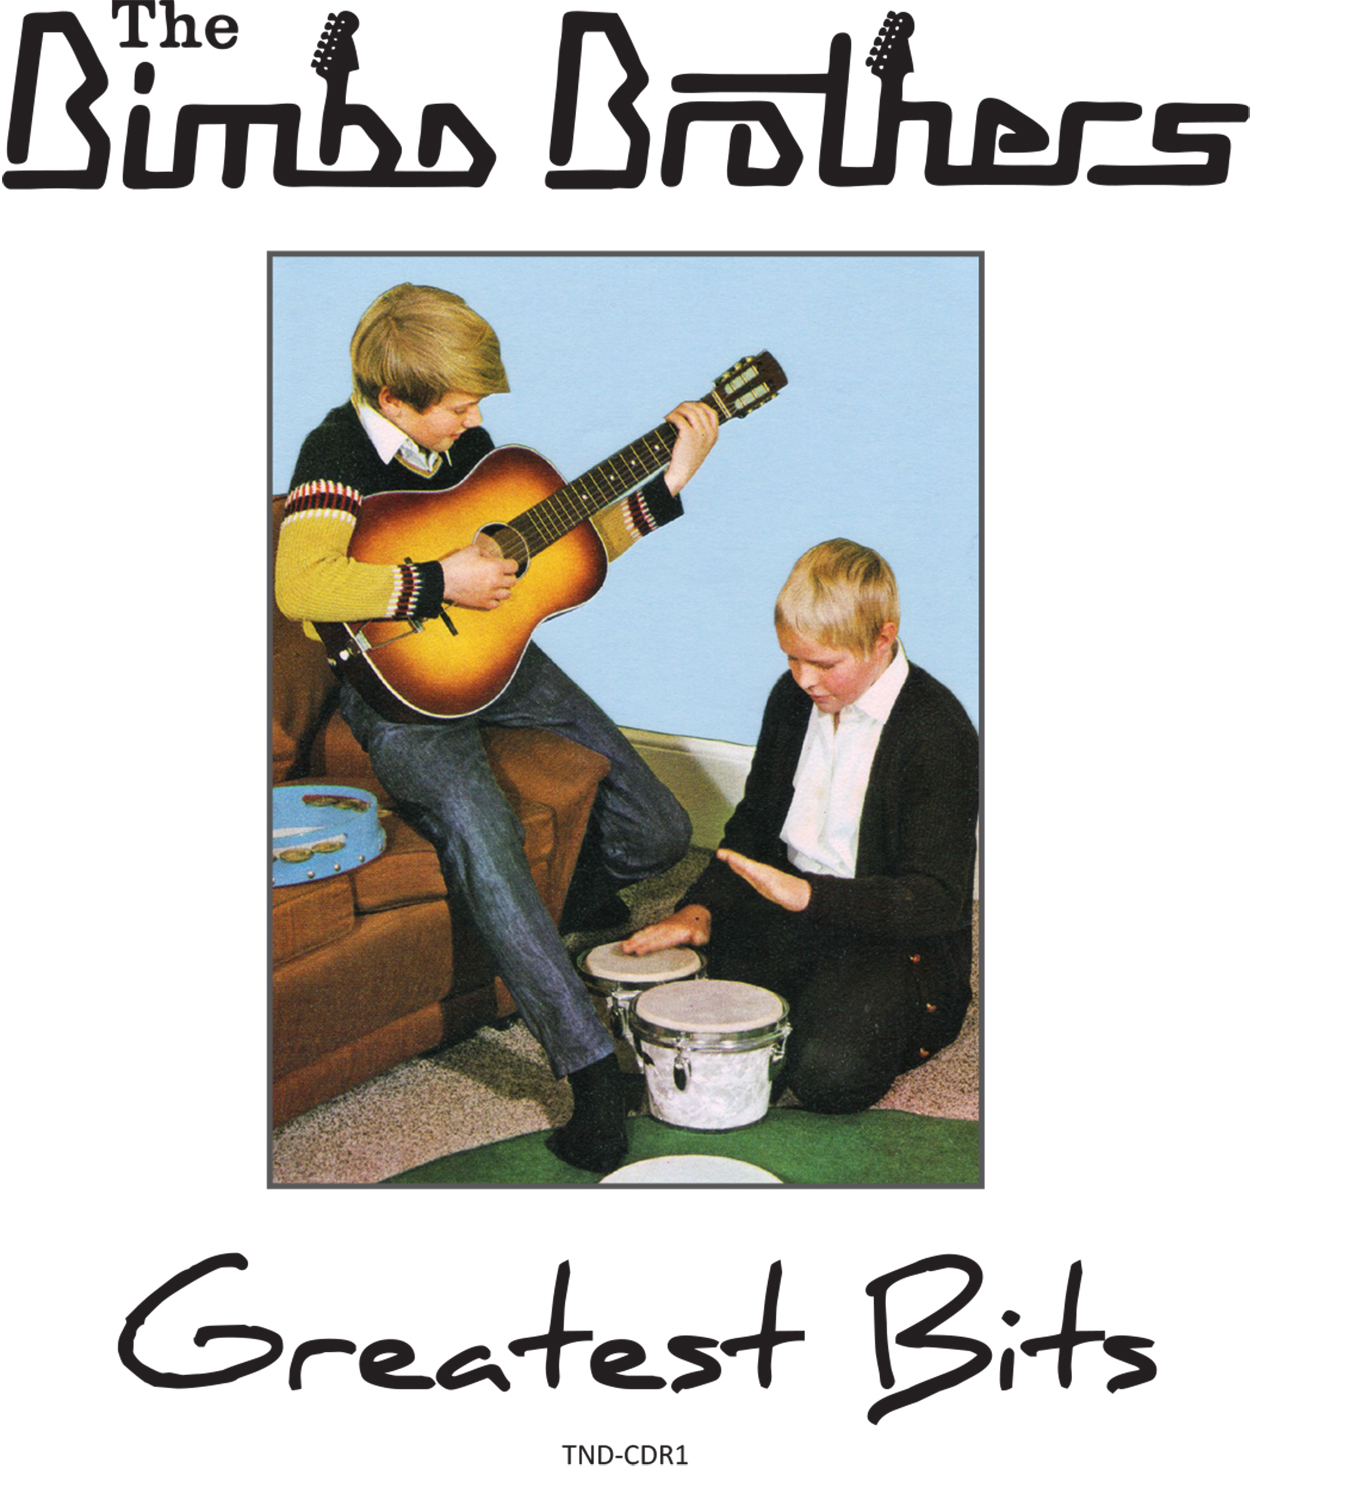 Bimbo Brothers CD-1.jpg